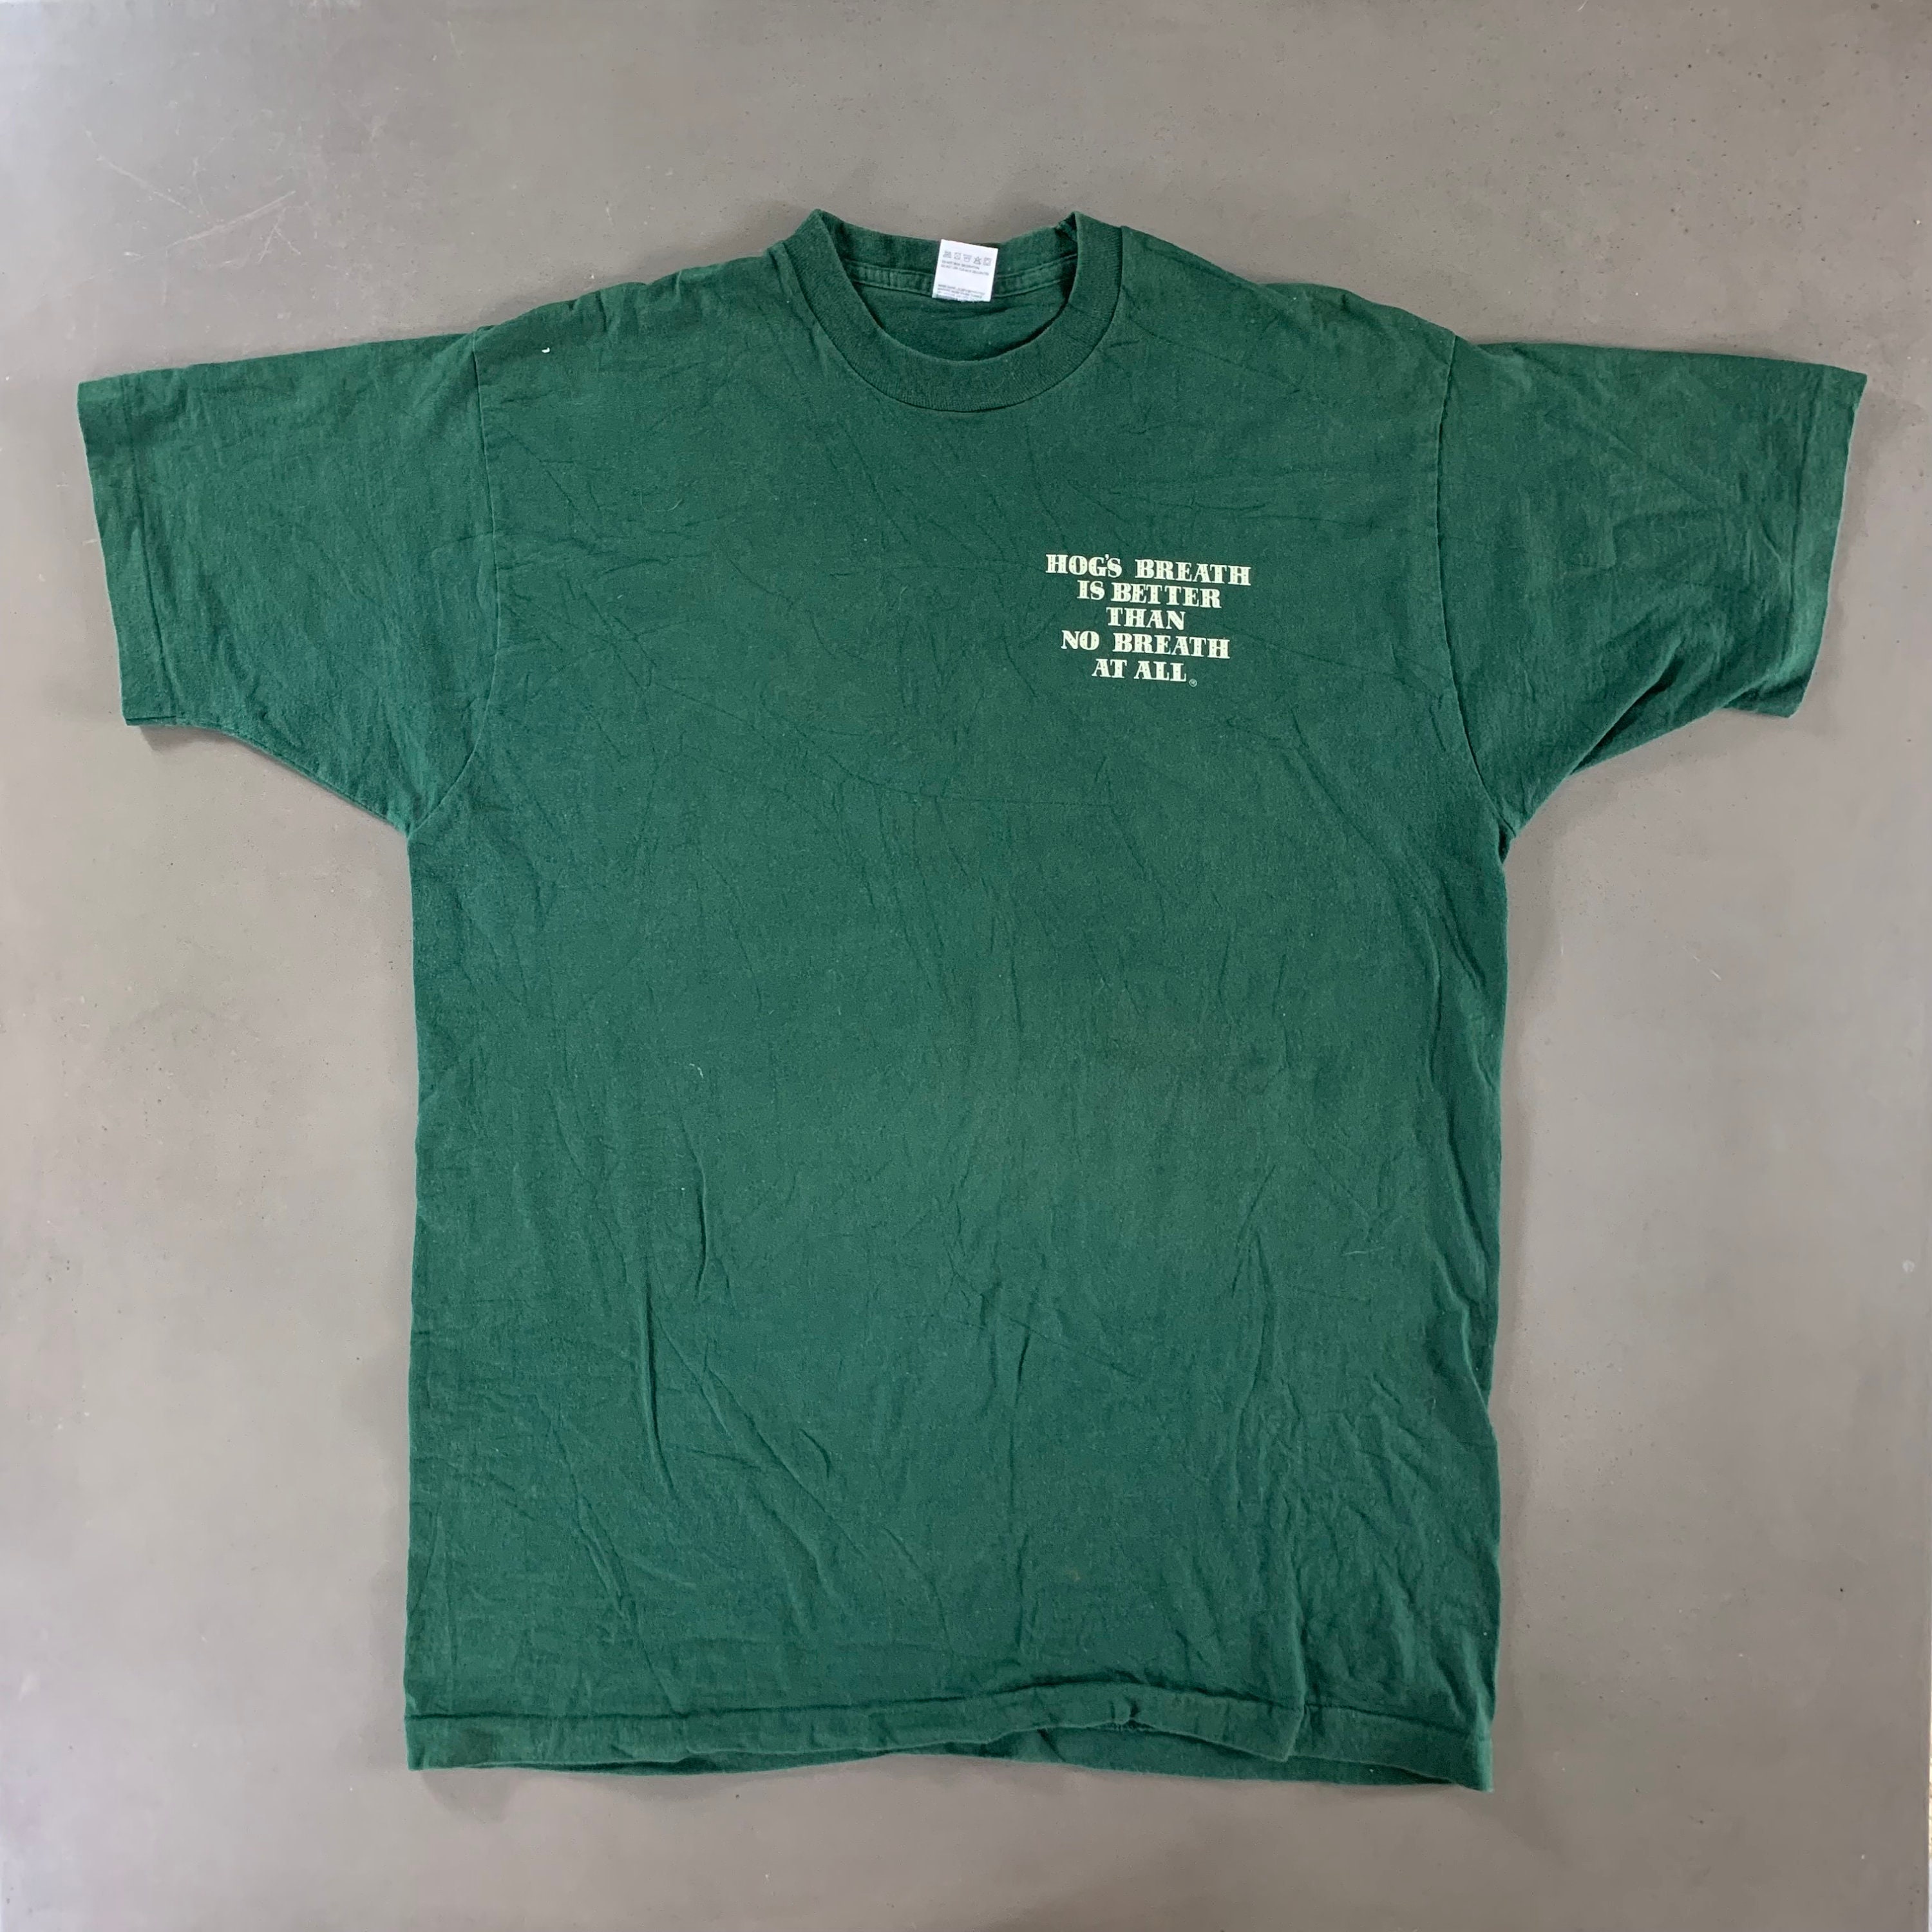 Vintage 1990s Hogs Breath T-shirt